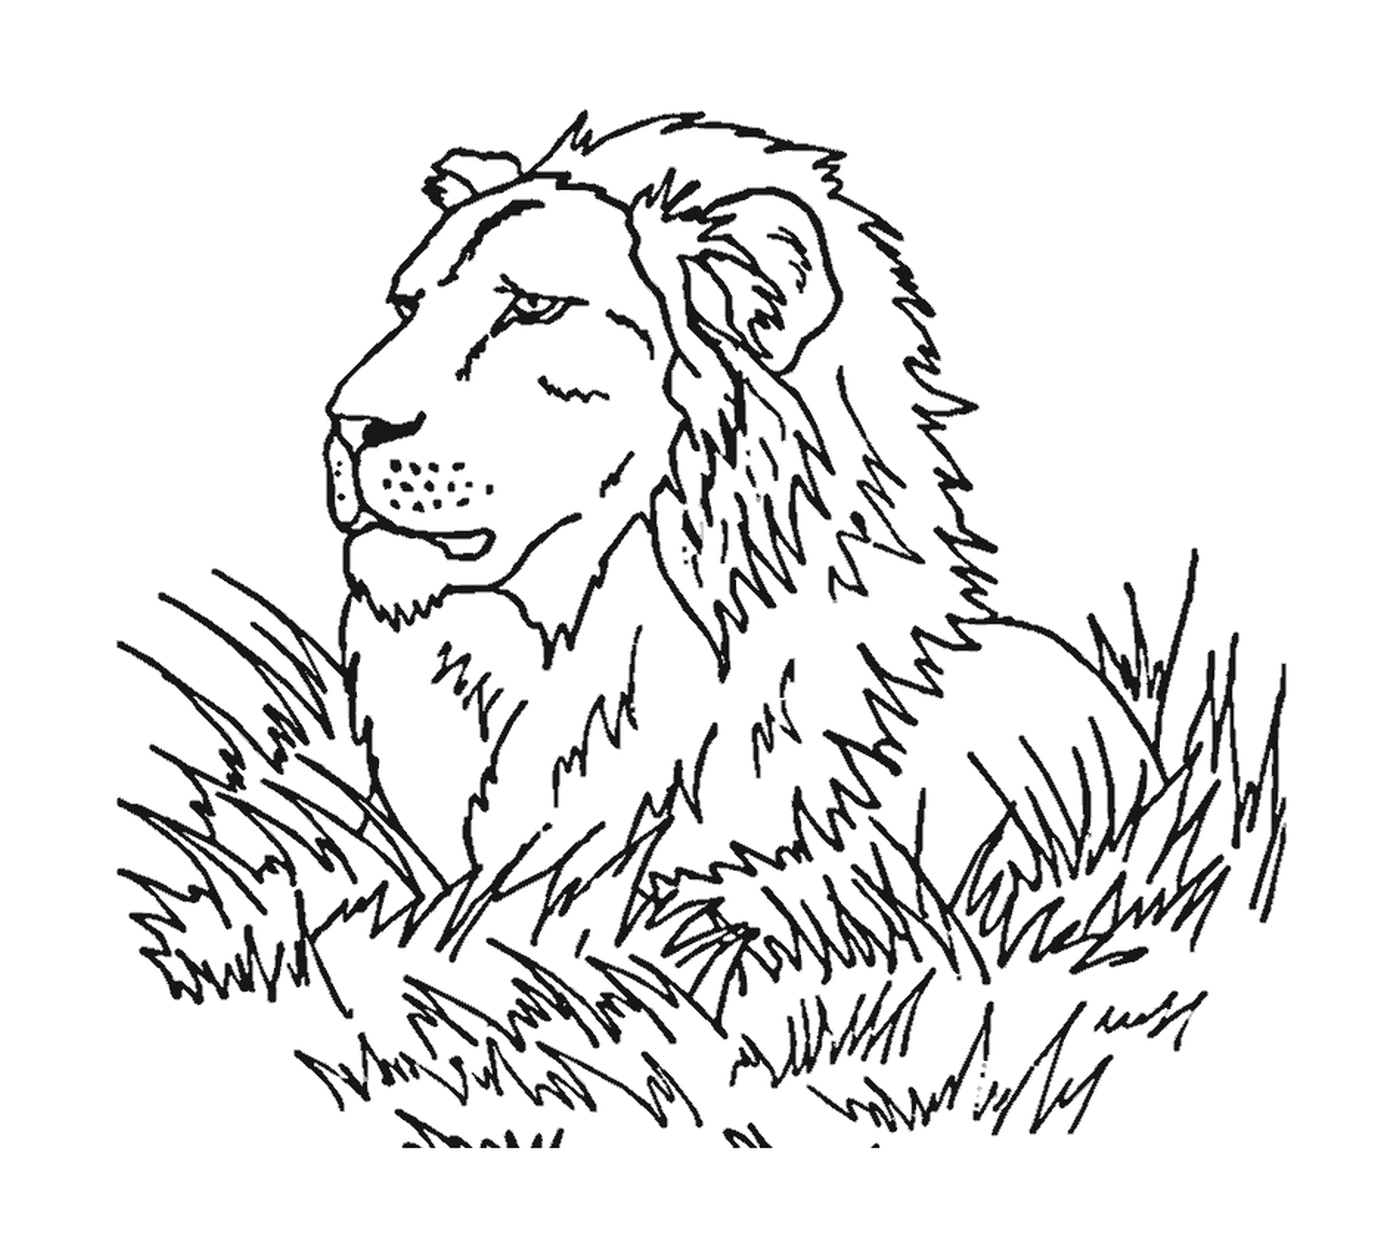  Leão na savana africana 